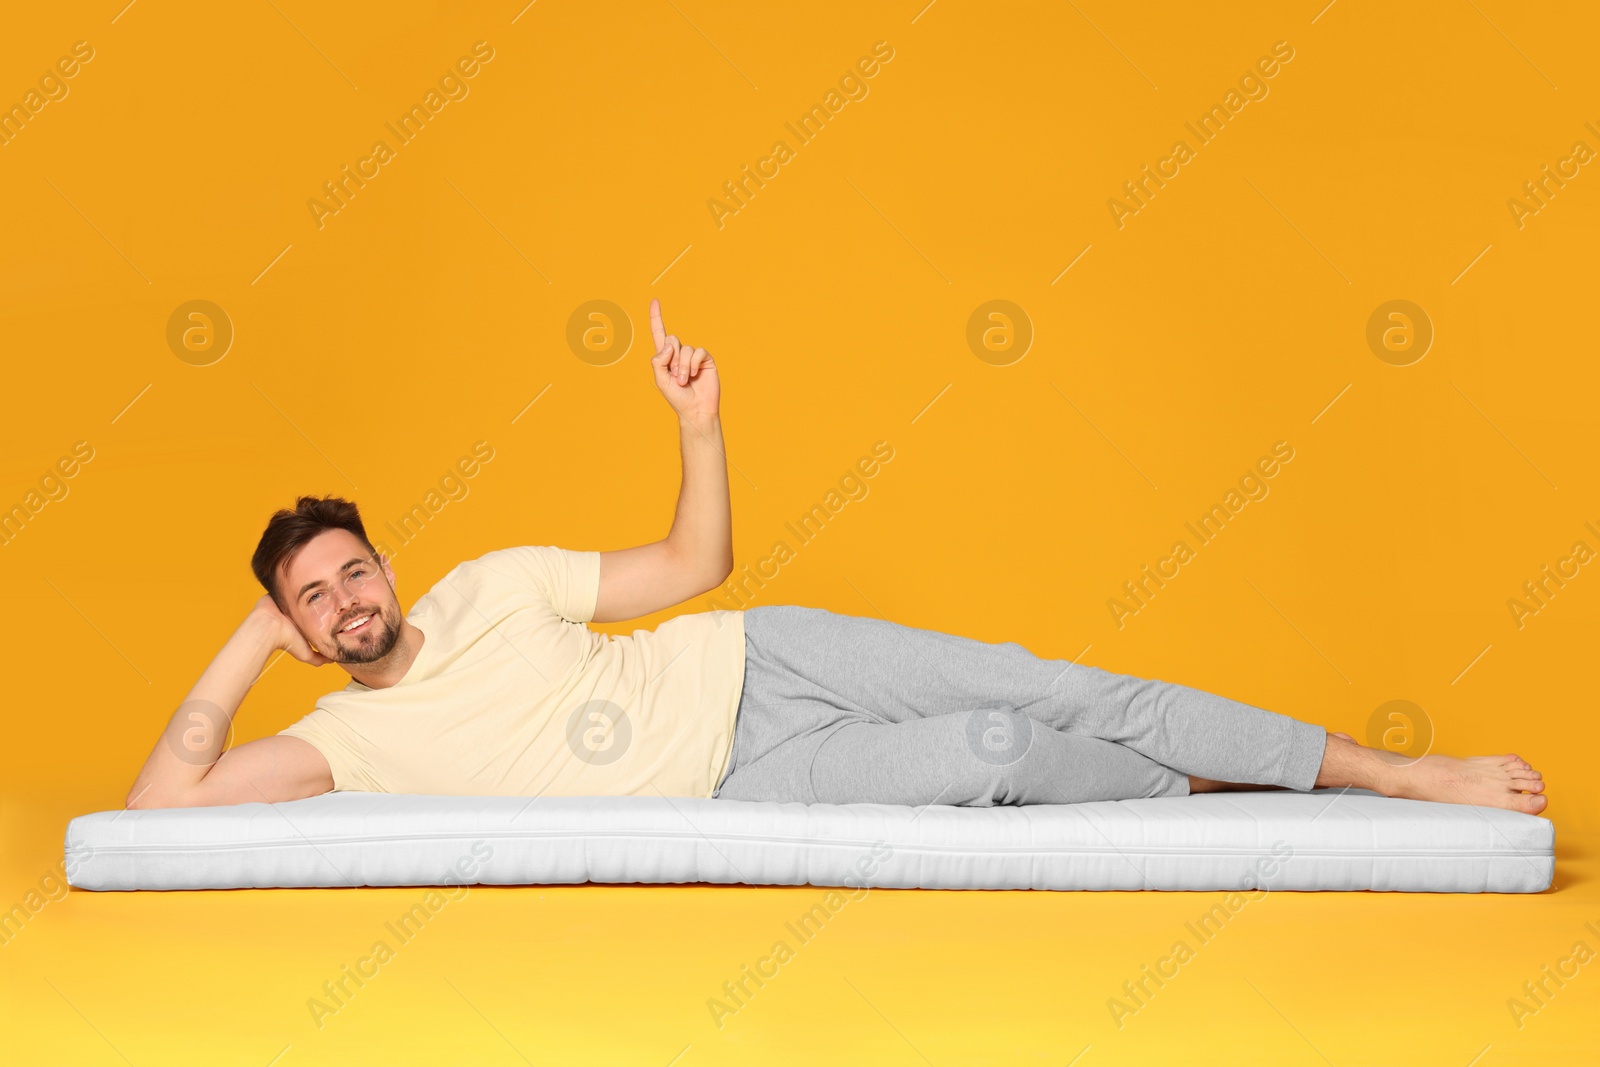 Photo of Man on soft mattress pointing upwards against orange background